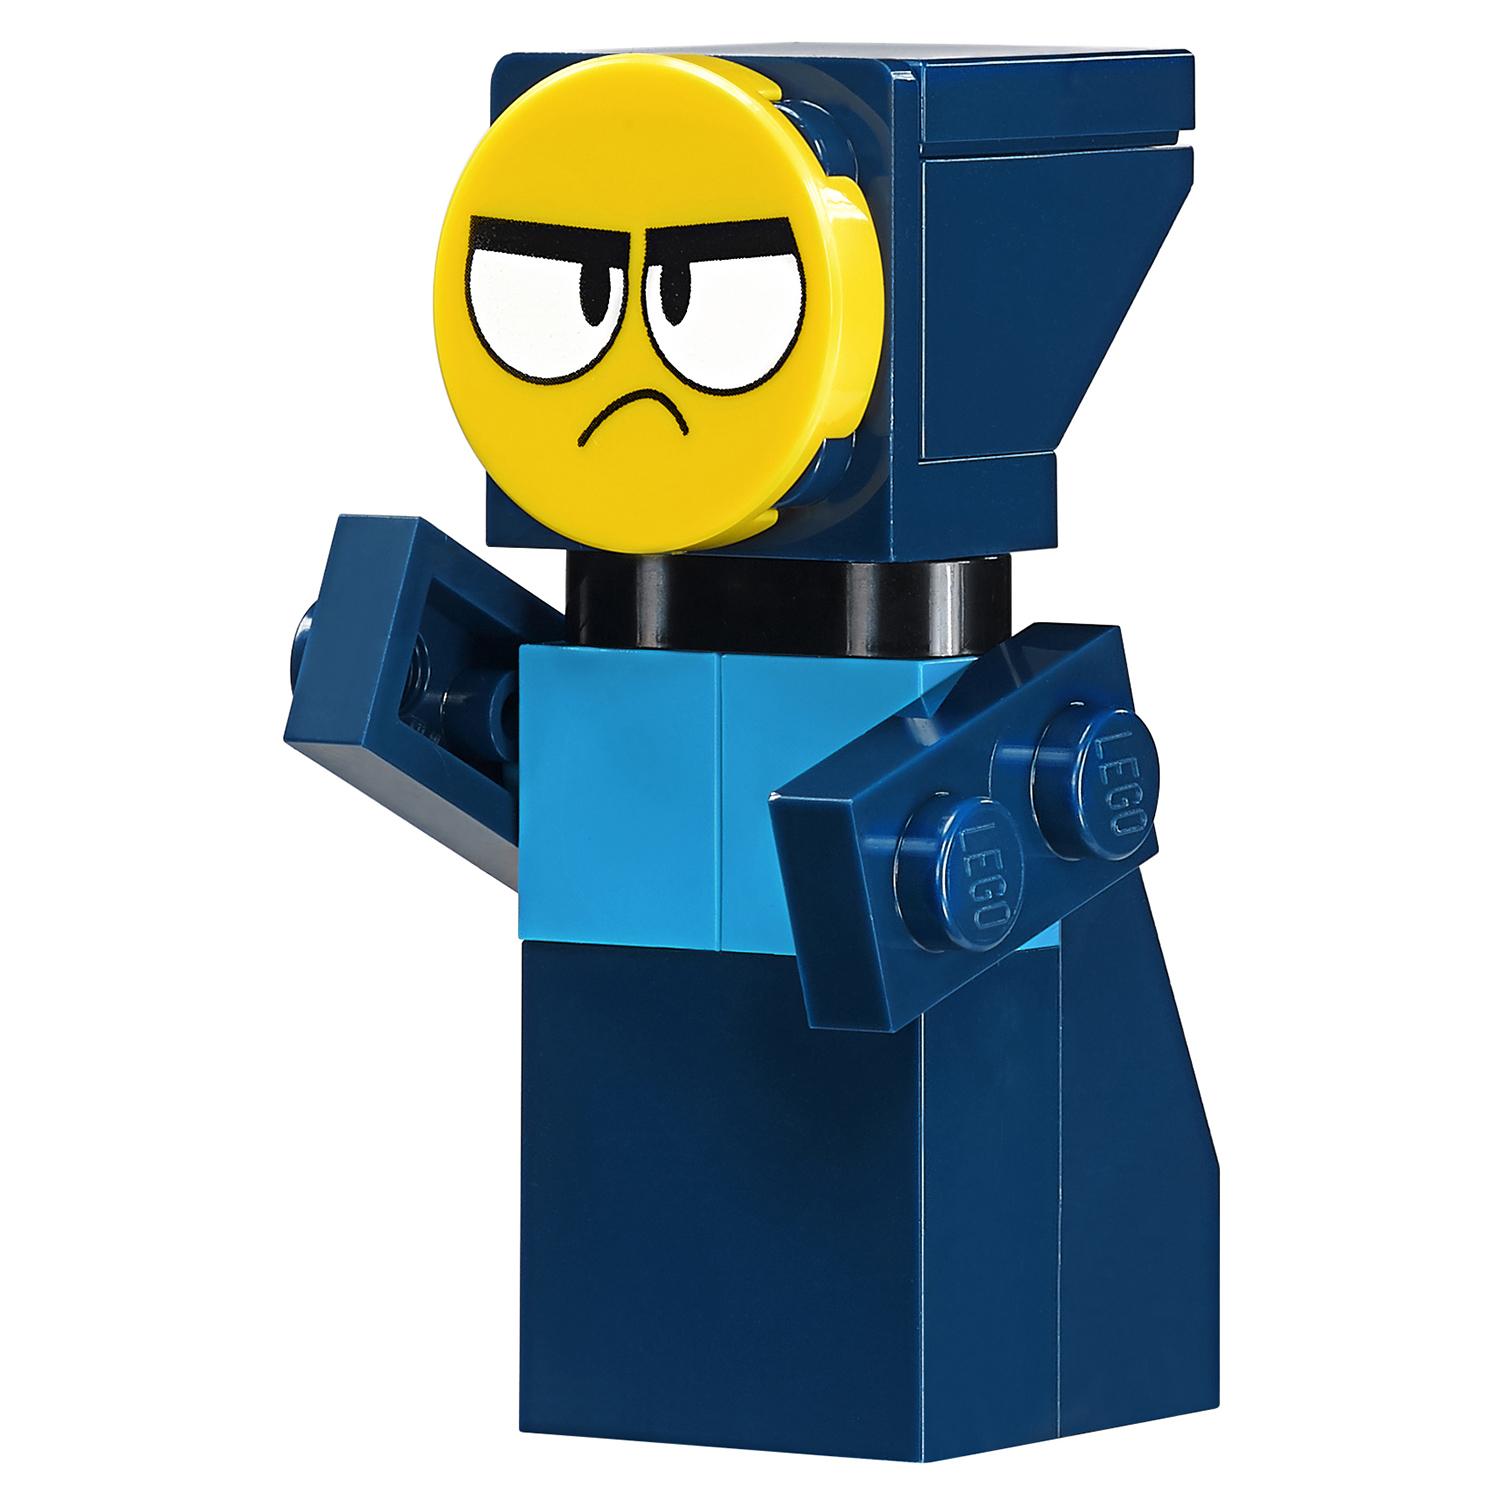 Lego Unikitty 41453 Вечеринка